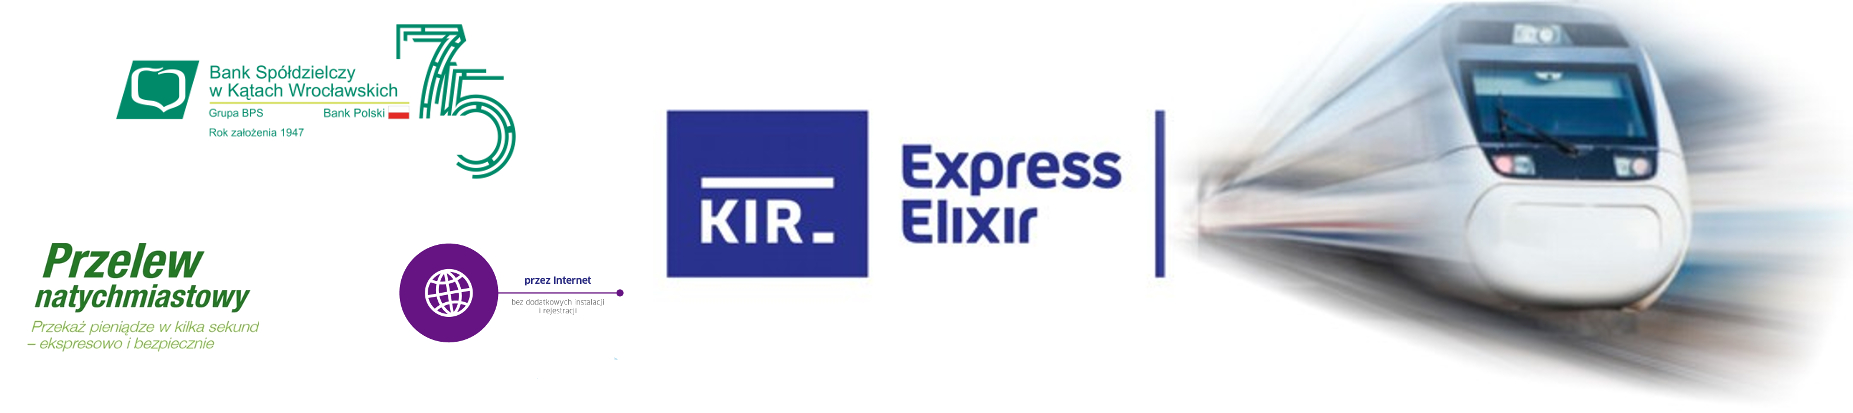 express elixir bskw